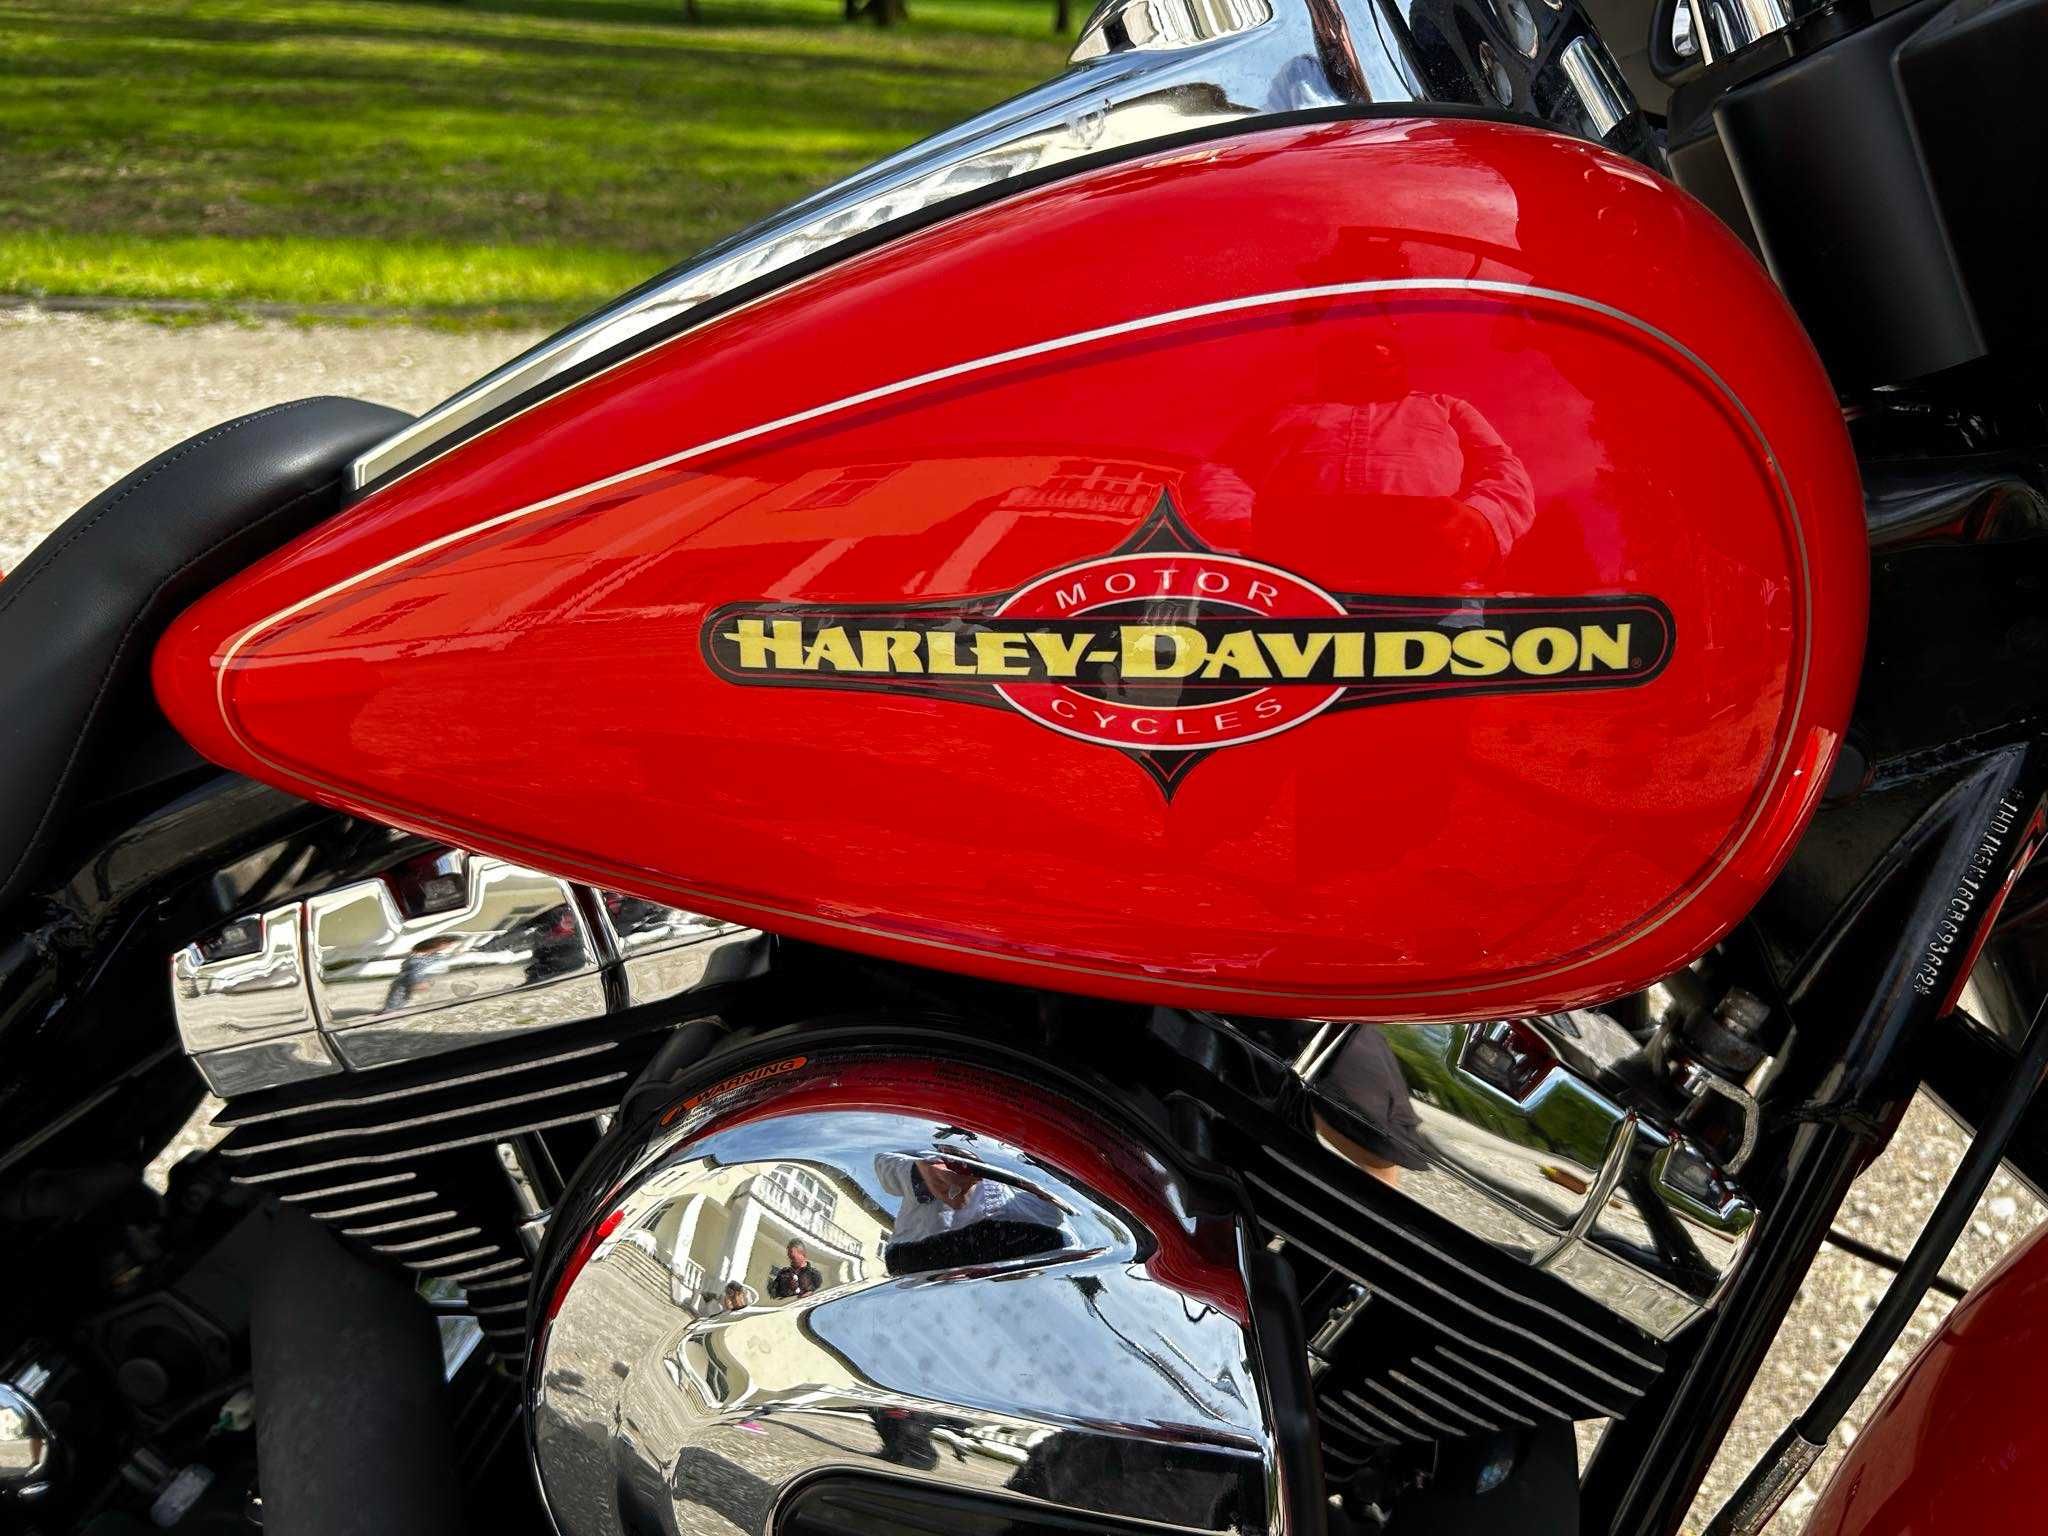 Harley Davidson FLHX Street Glide 2012 silnik 103